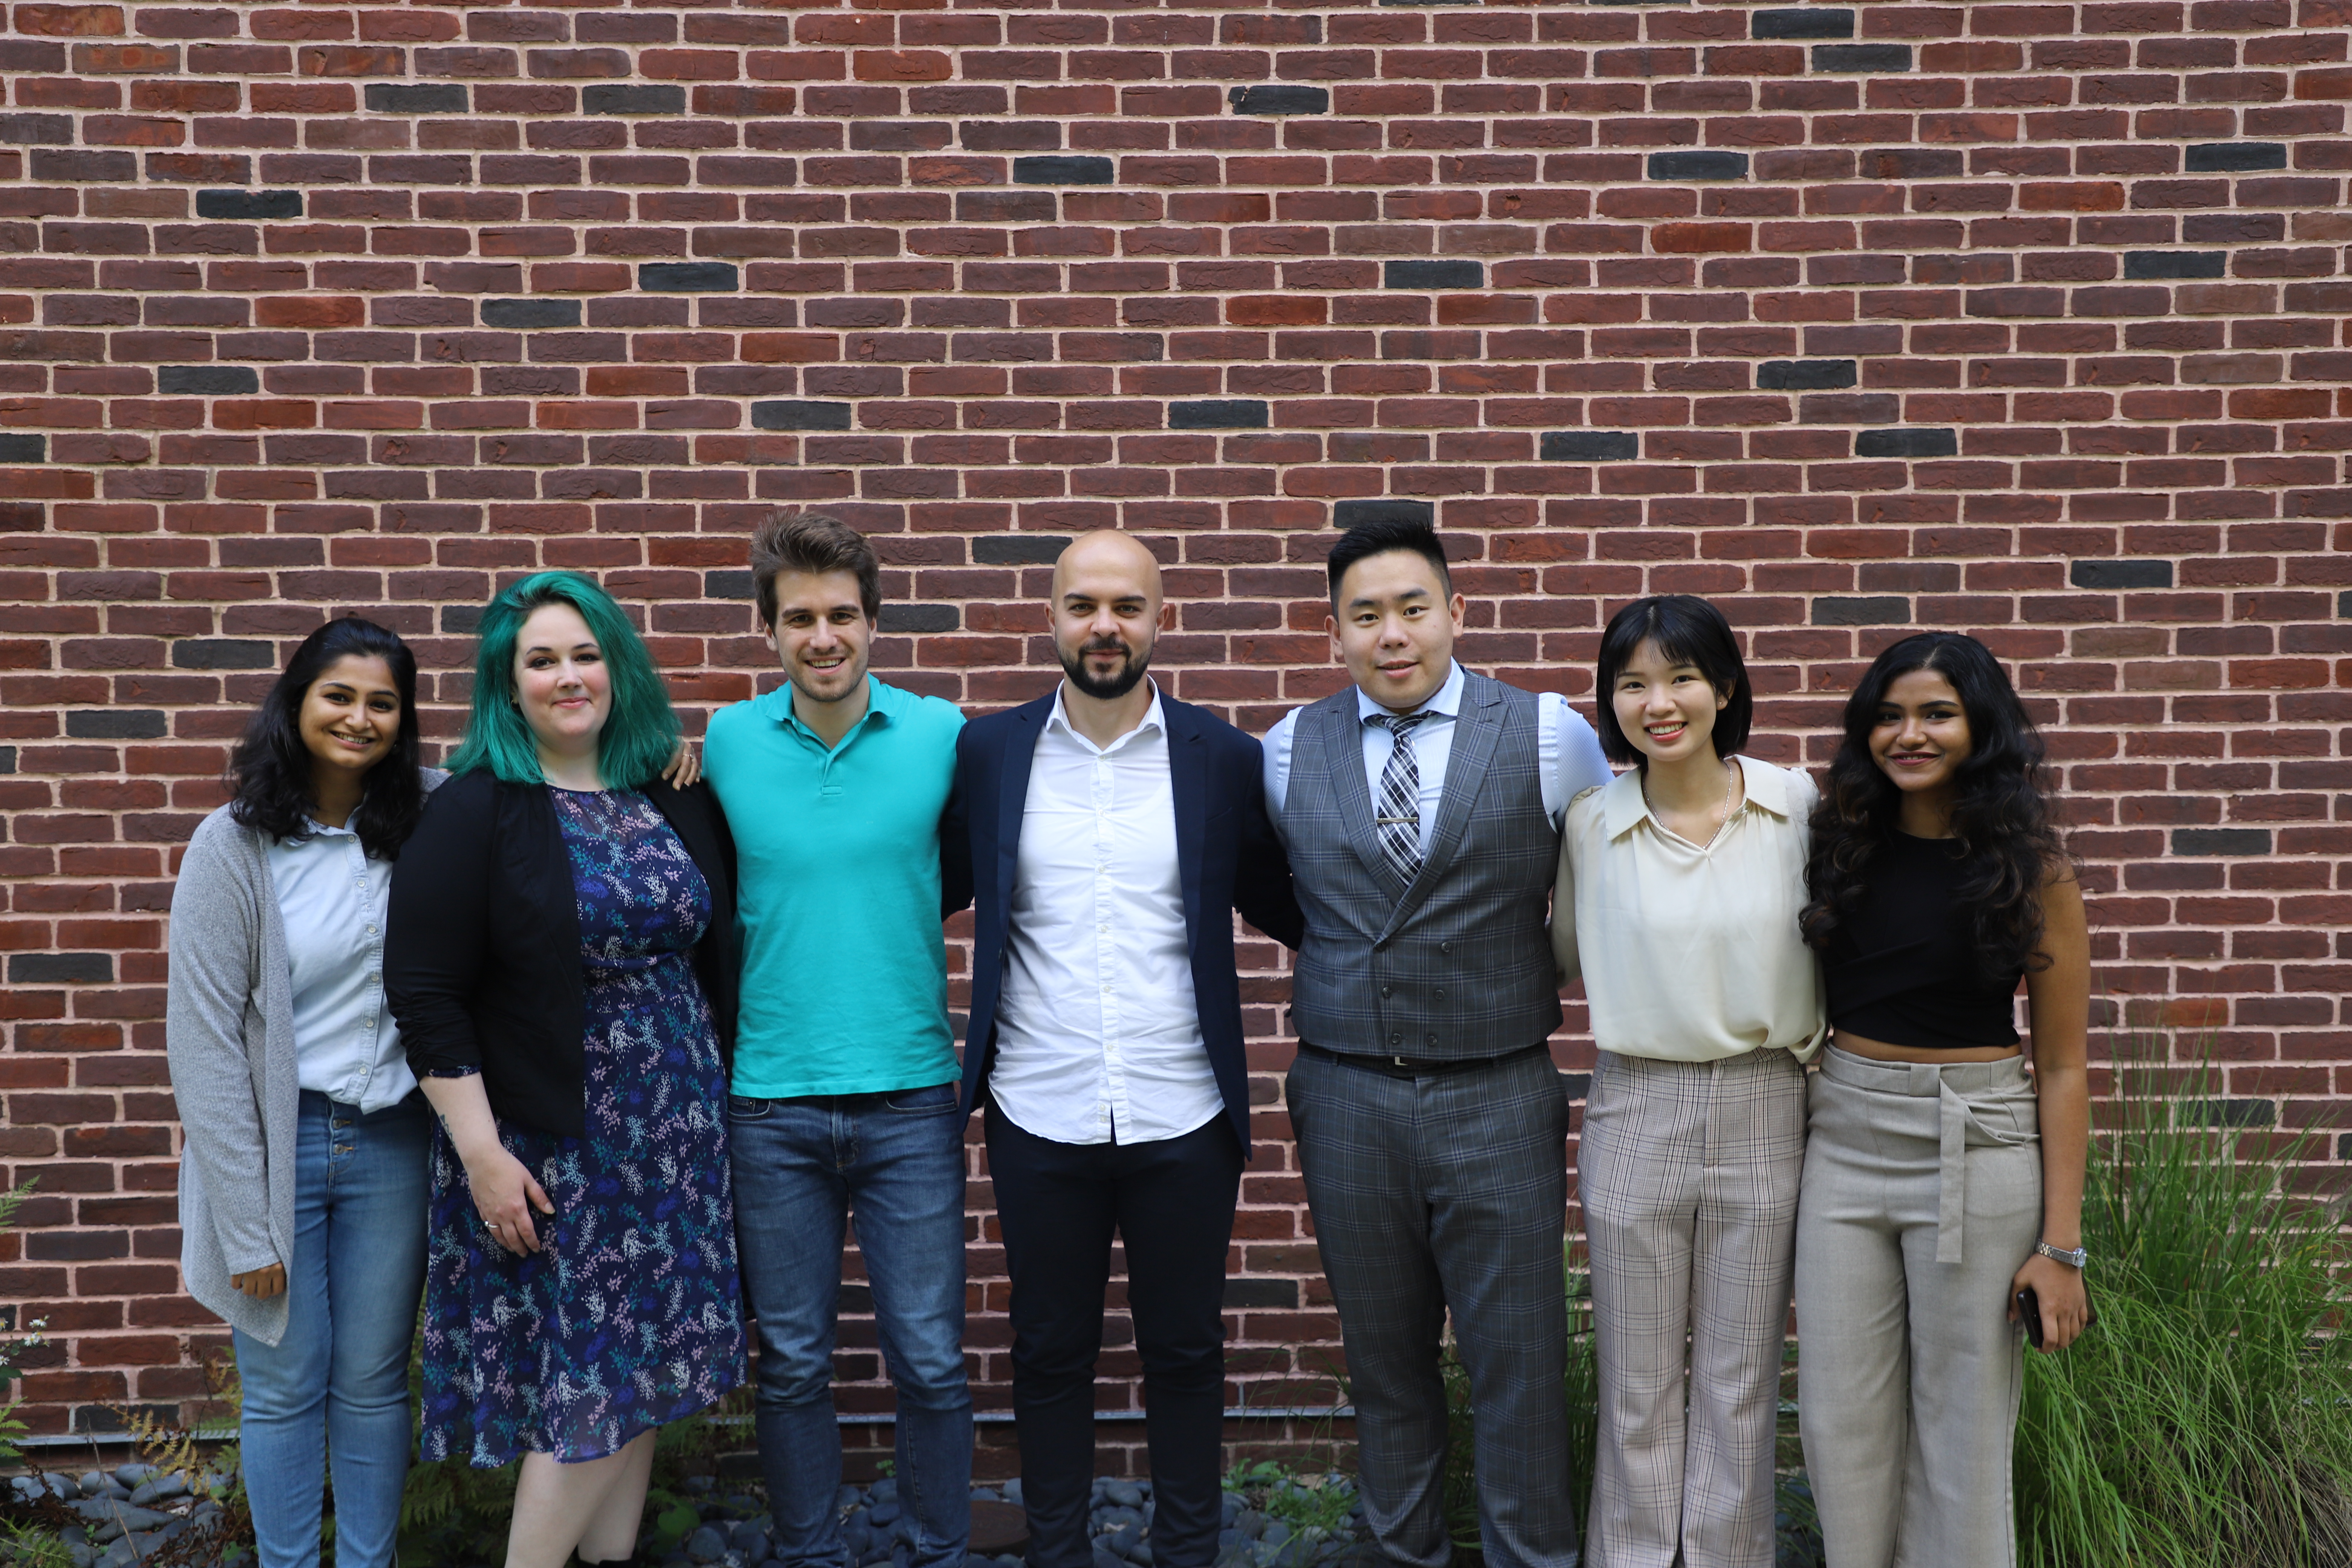 Student Ambassadors (from left): Shanaaz Kamal, Amanda Quaranto-Schulte, Krisztian Gado, Klaudio Prifiti, Darren Deng, Ruth Yang, Santoshi Kumari Kotni 